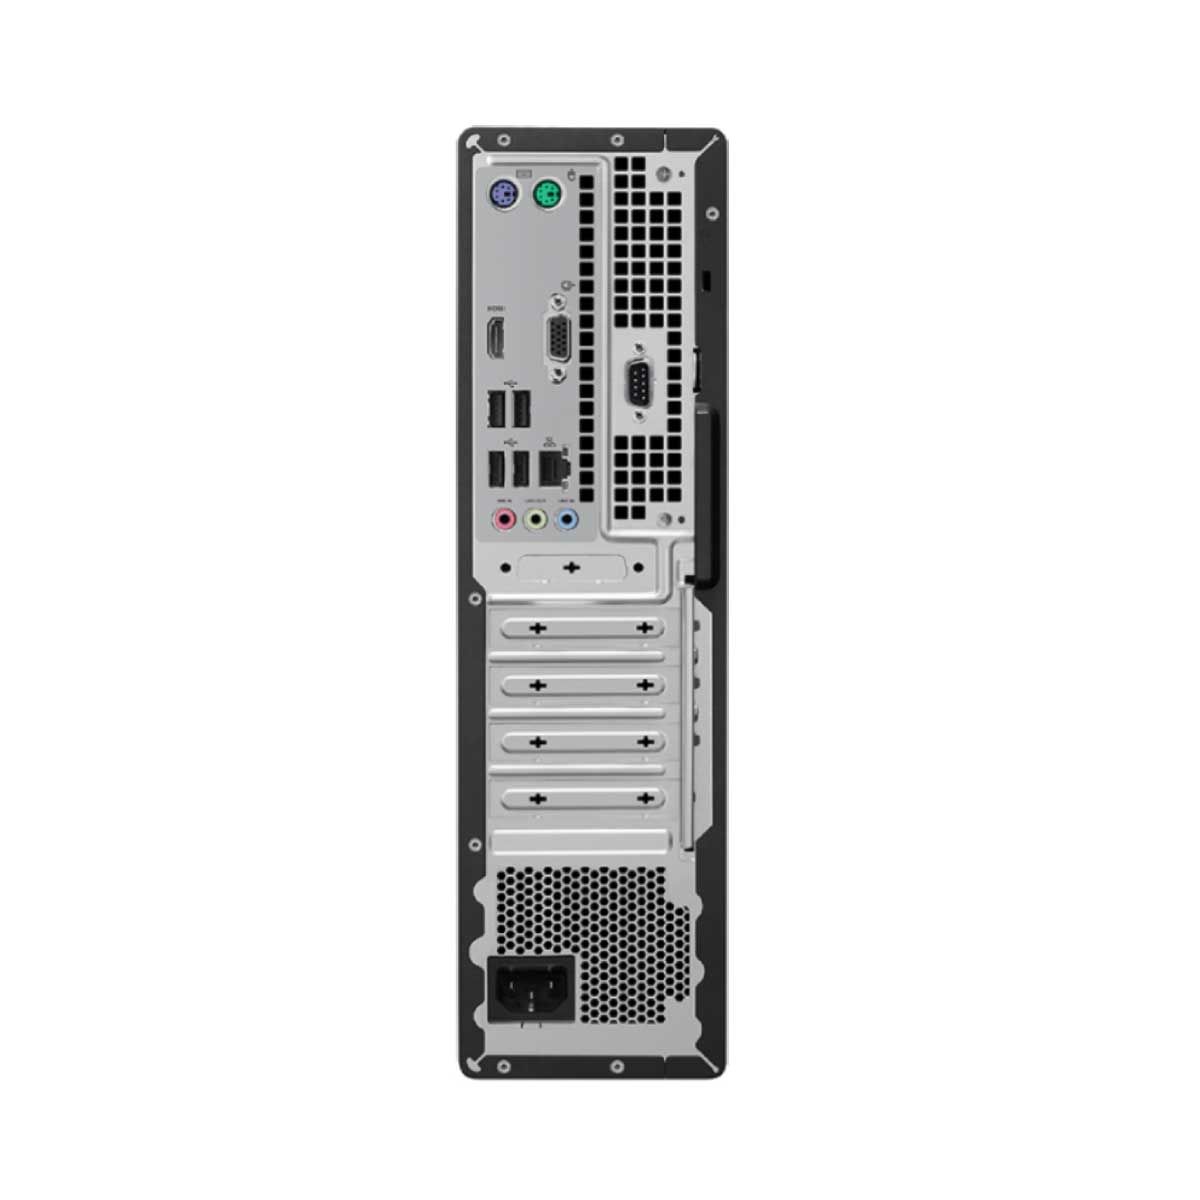 DESKTOP PC (คอมพิวเตอร์ตั้งโต๊ะ) ASUS S500SE-313100027W